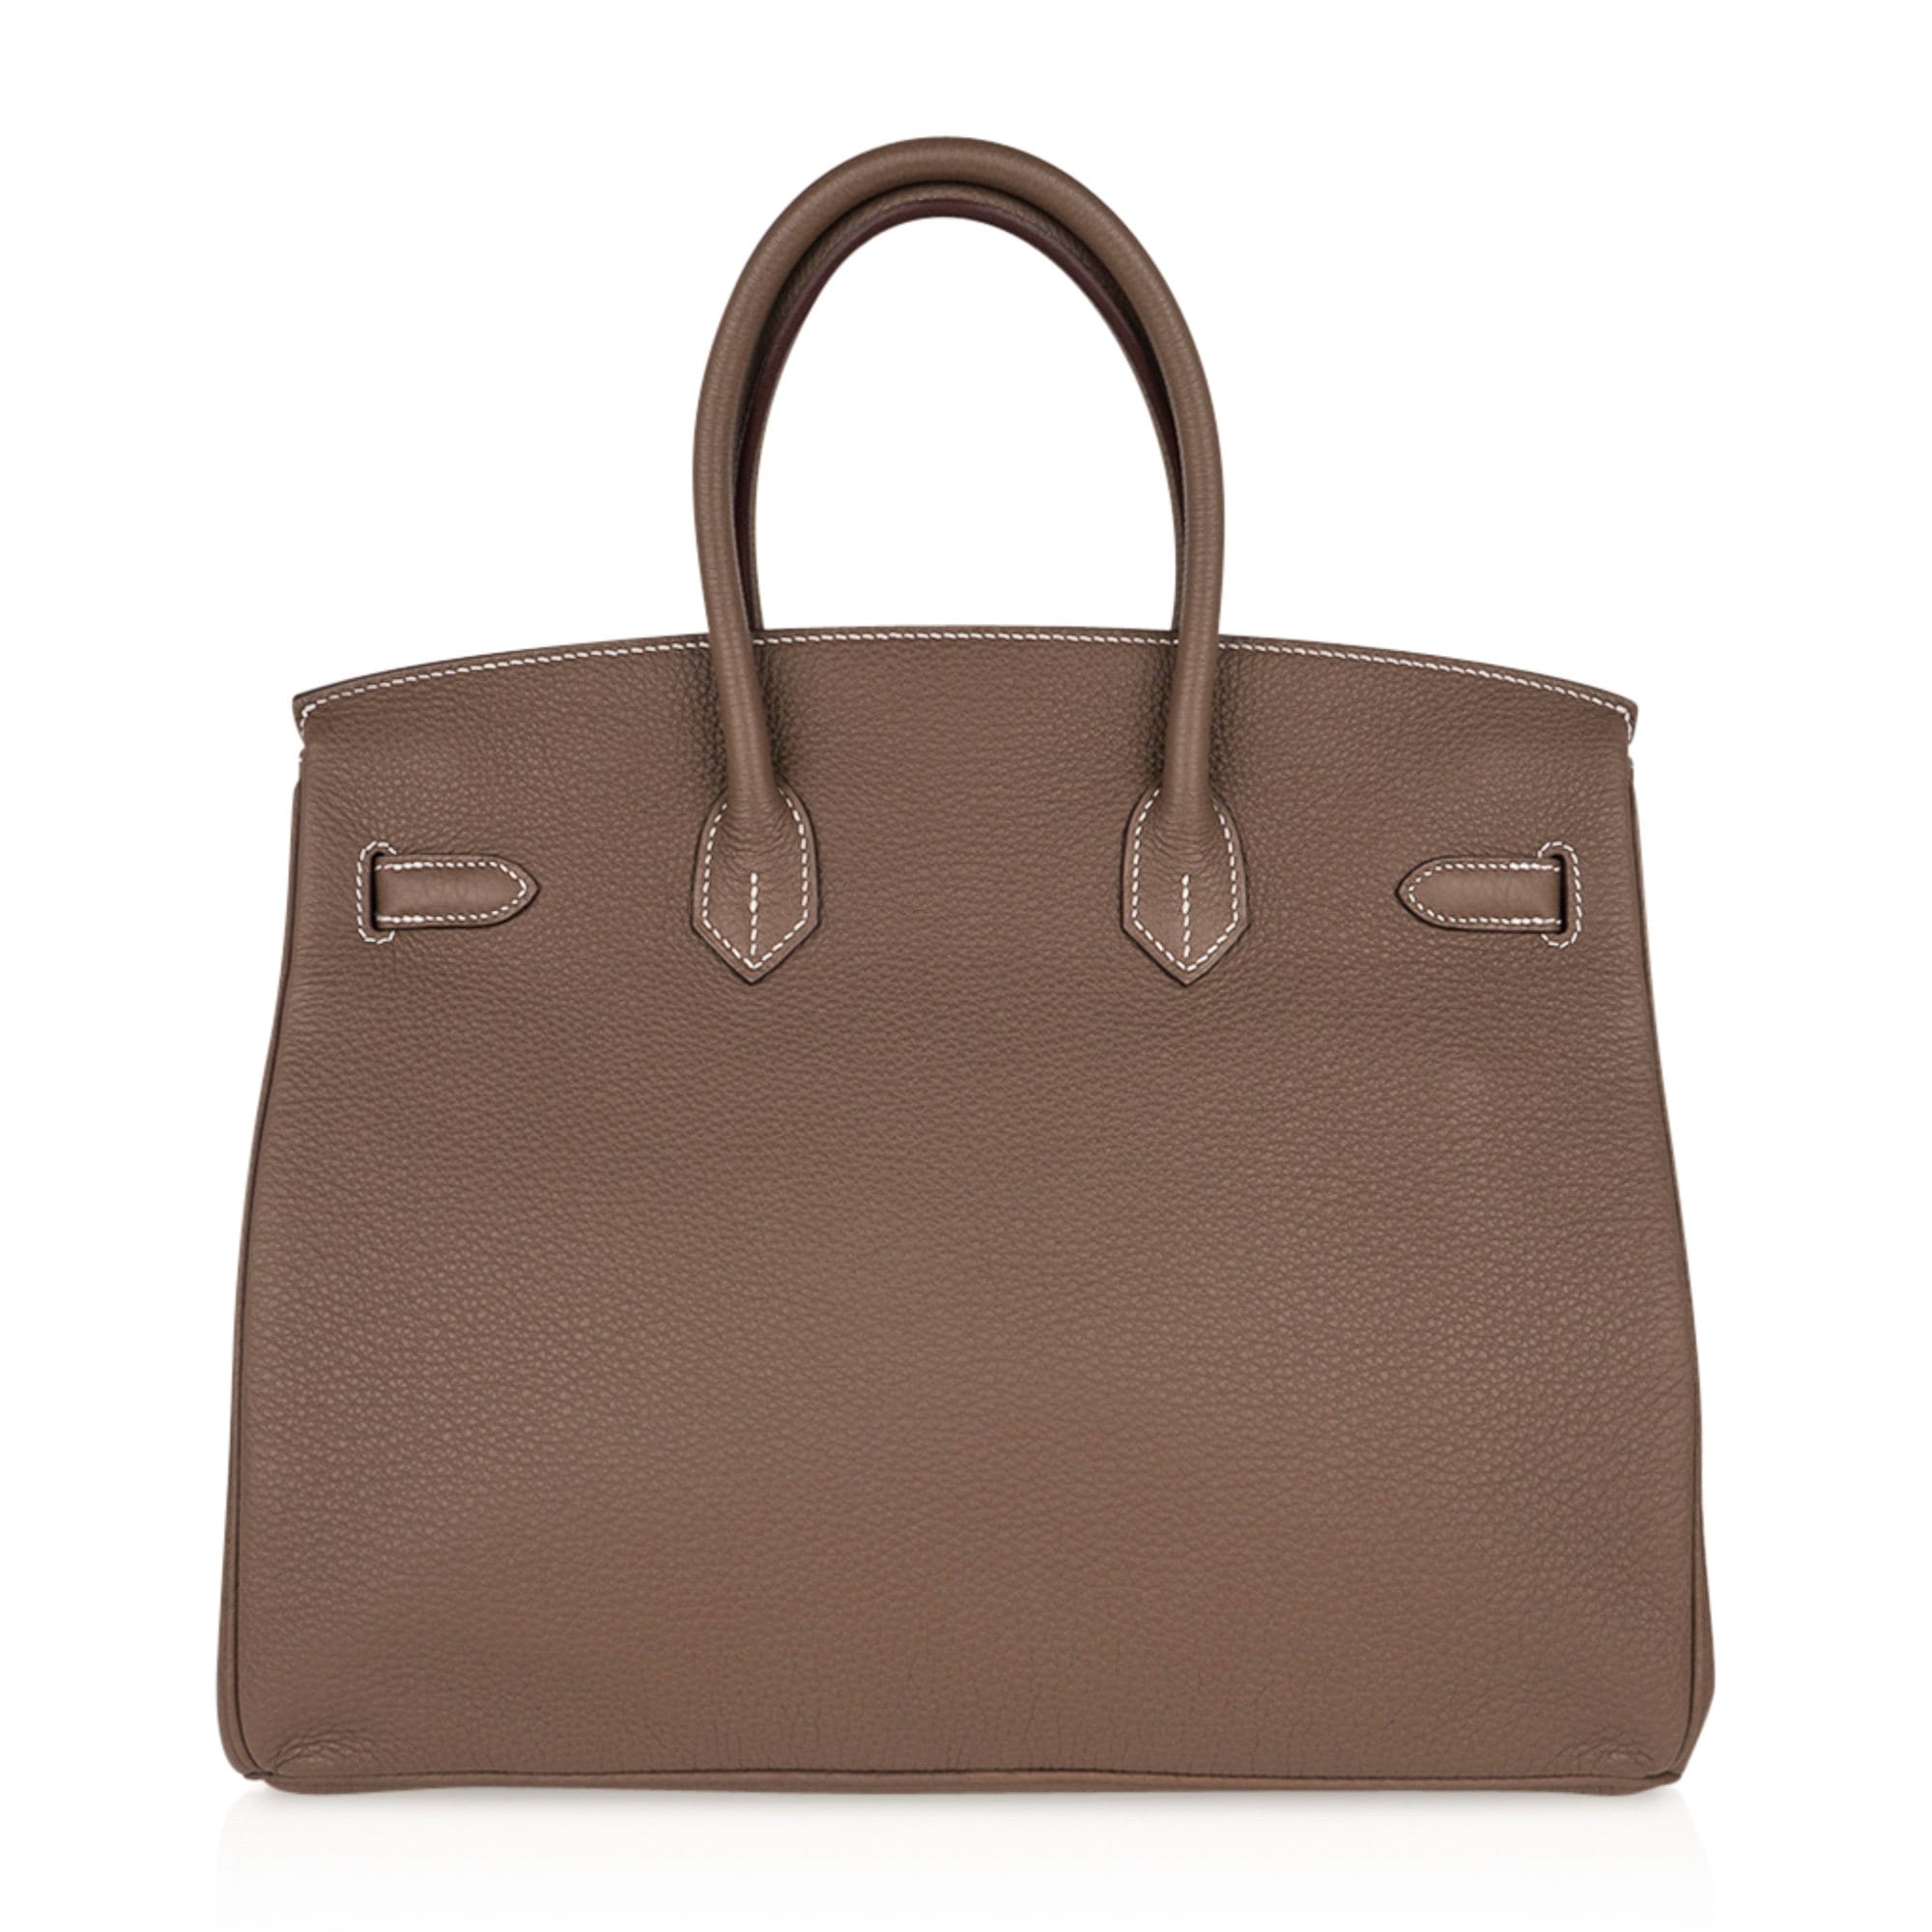 Handbags Hermès Birkin 35 Togo